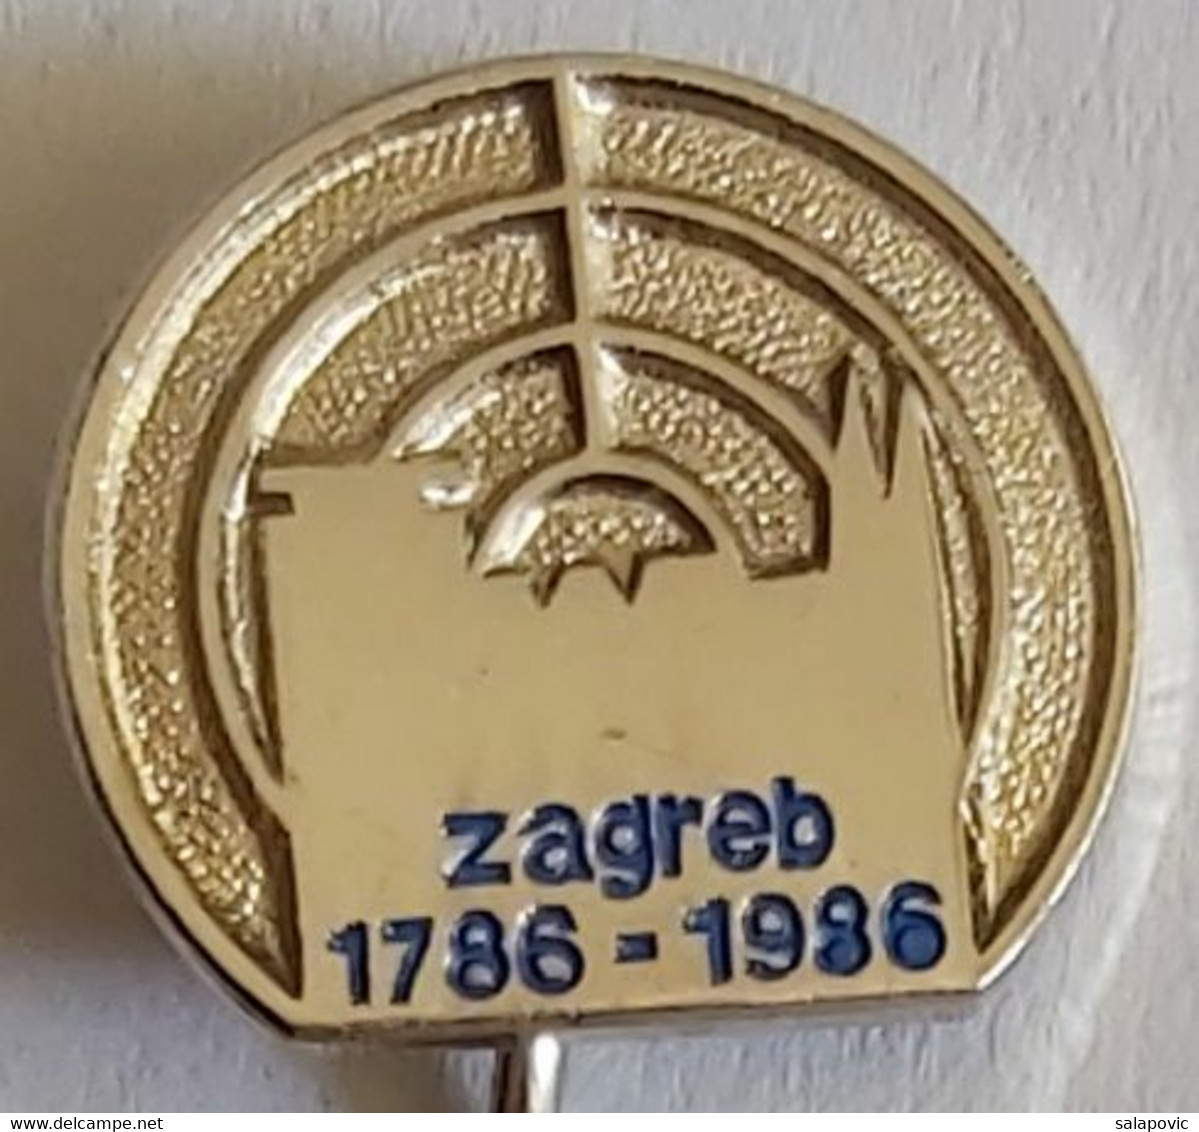 Zagreb 1786 - 1986 Croatia Archery Zagreb Shooting Association PIN A6/2 - Tiro Al Arco